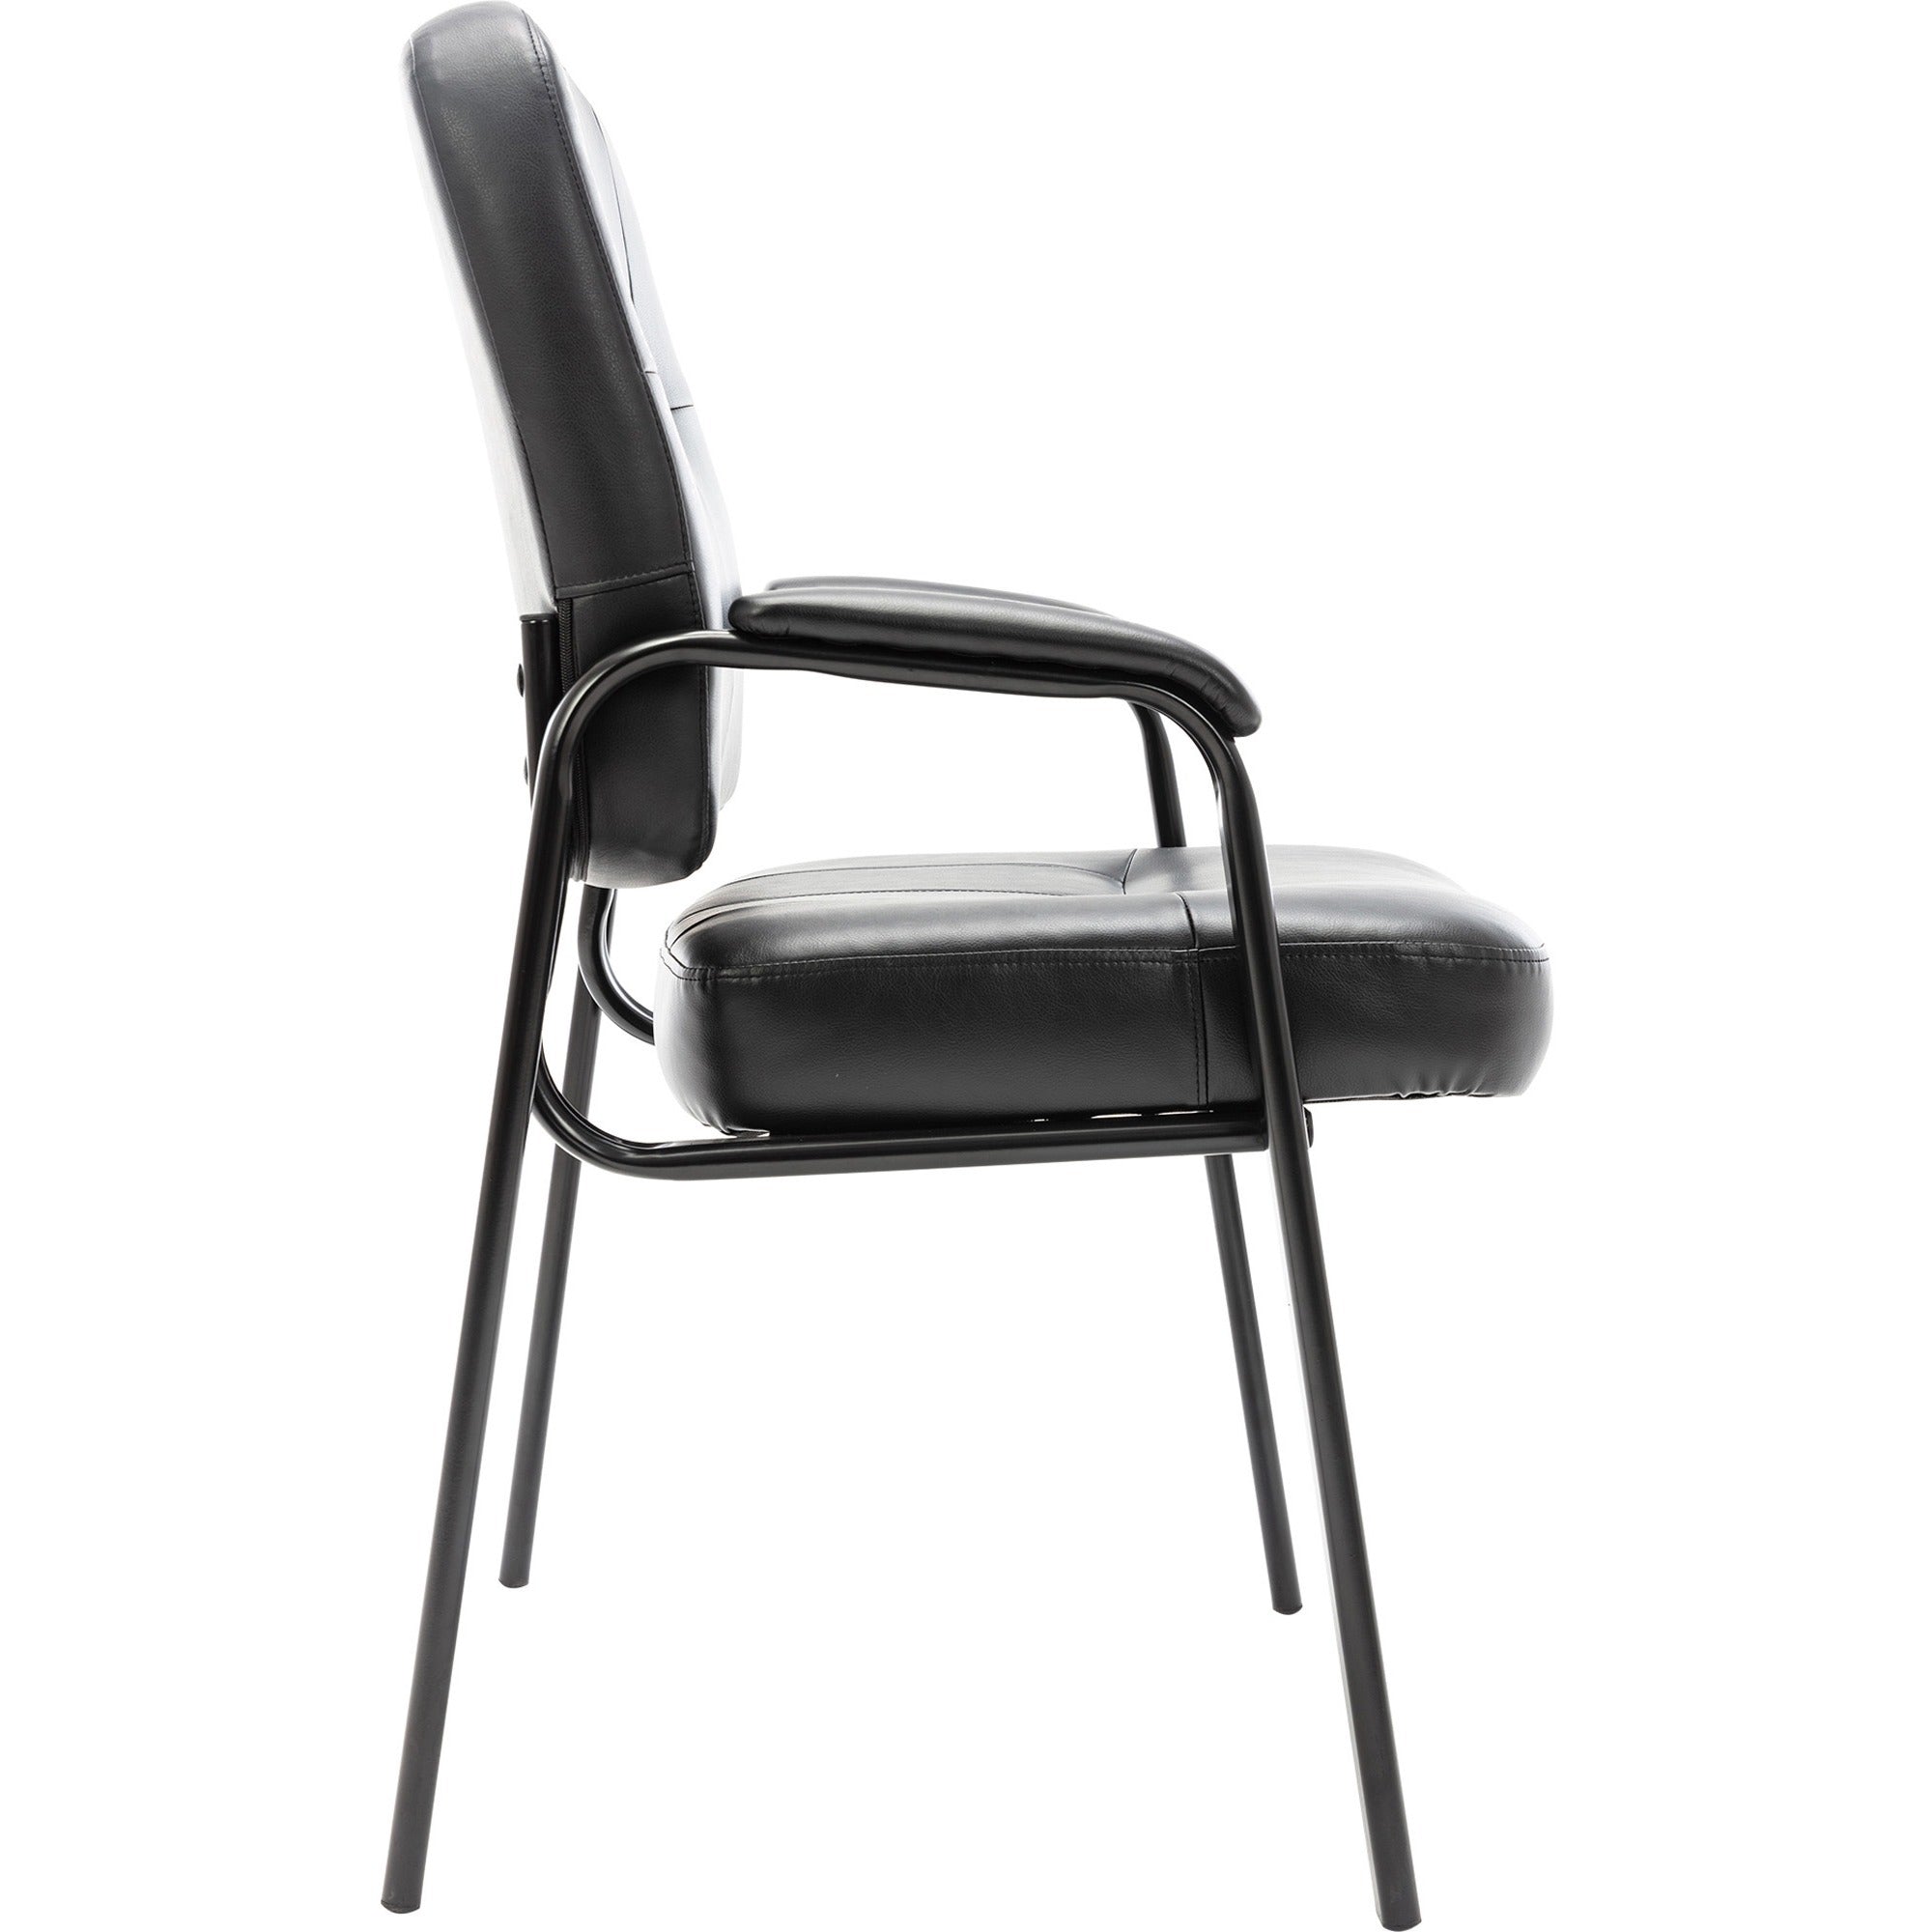 Lorell Chadwick Series Guest Chair - Black Leather Seat - Black Steel Frame - Black - Steel, Leather - 1 Each - 